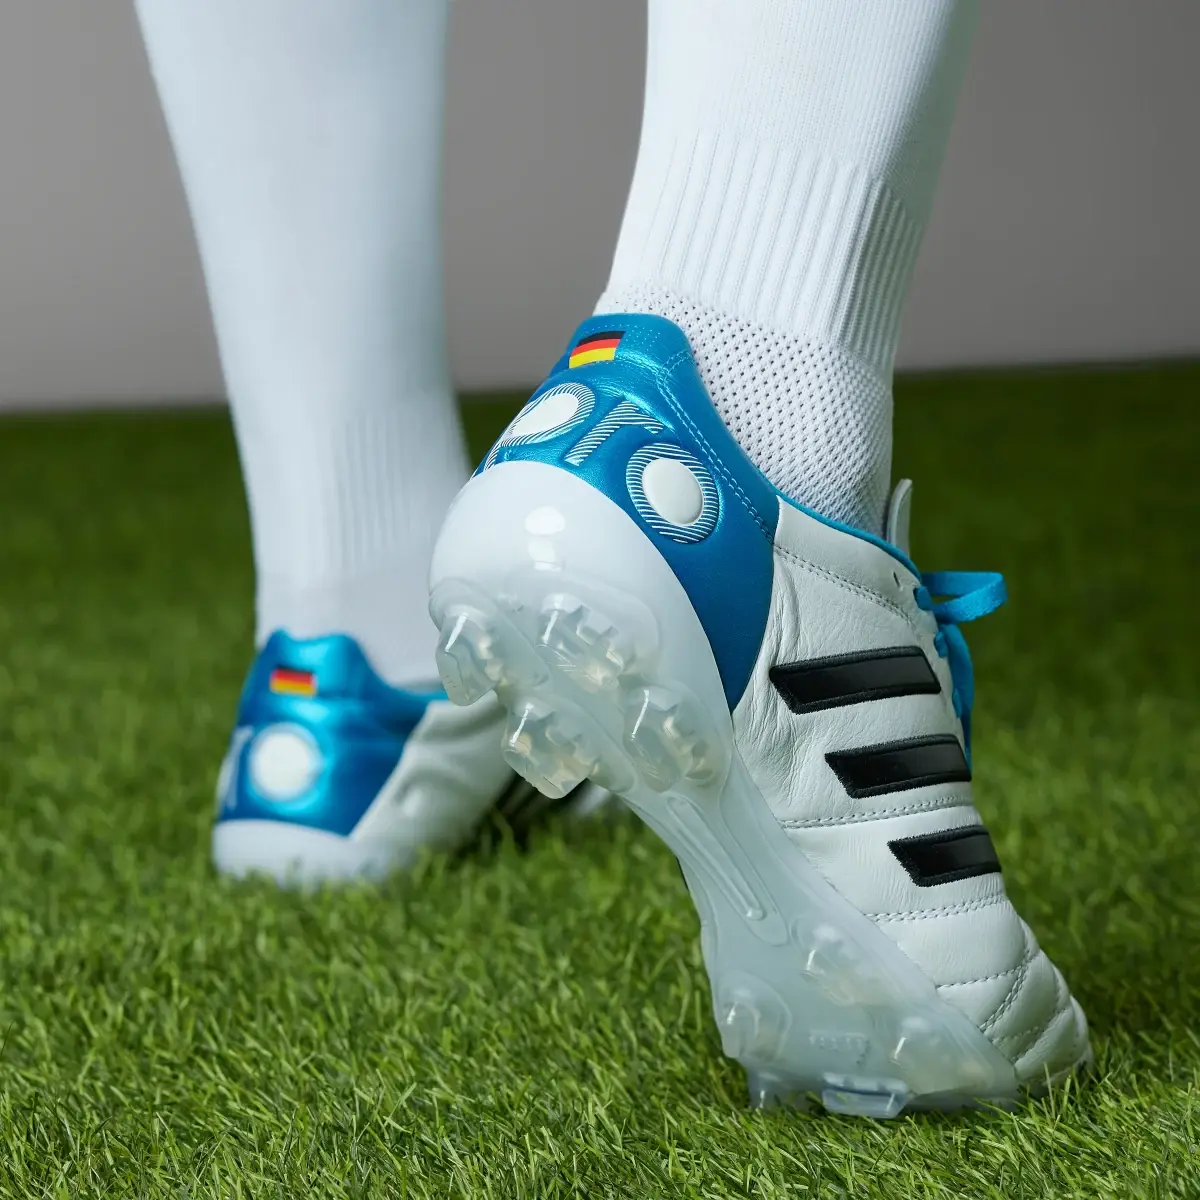 Adidas Botas de Futebol 11Pro Toni Kroos – Piso firme. 2